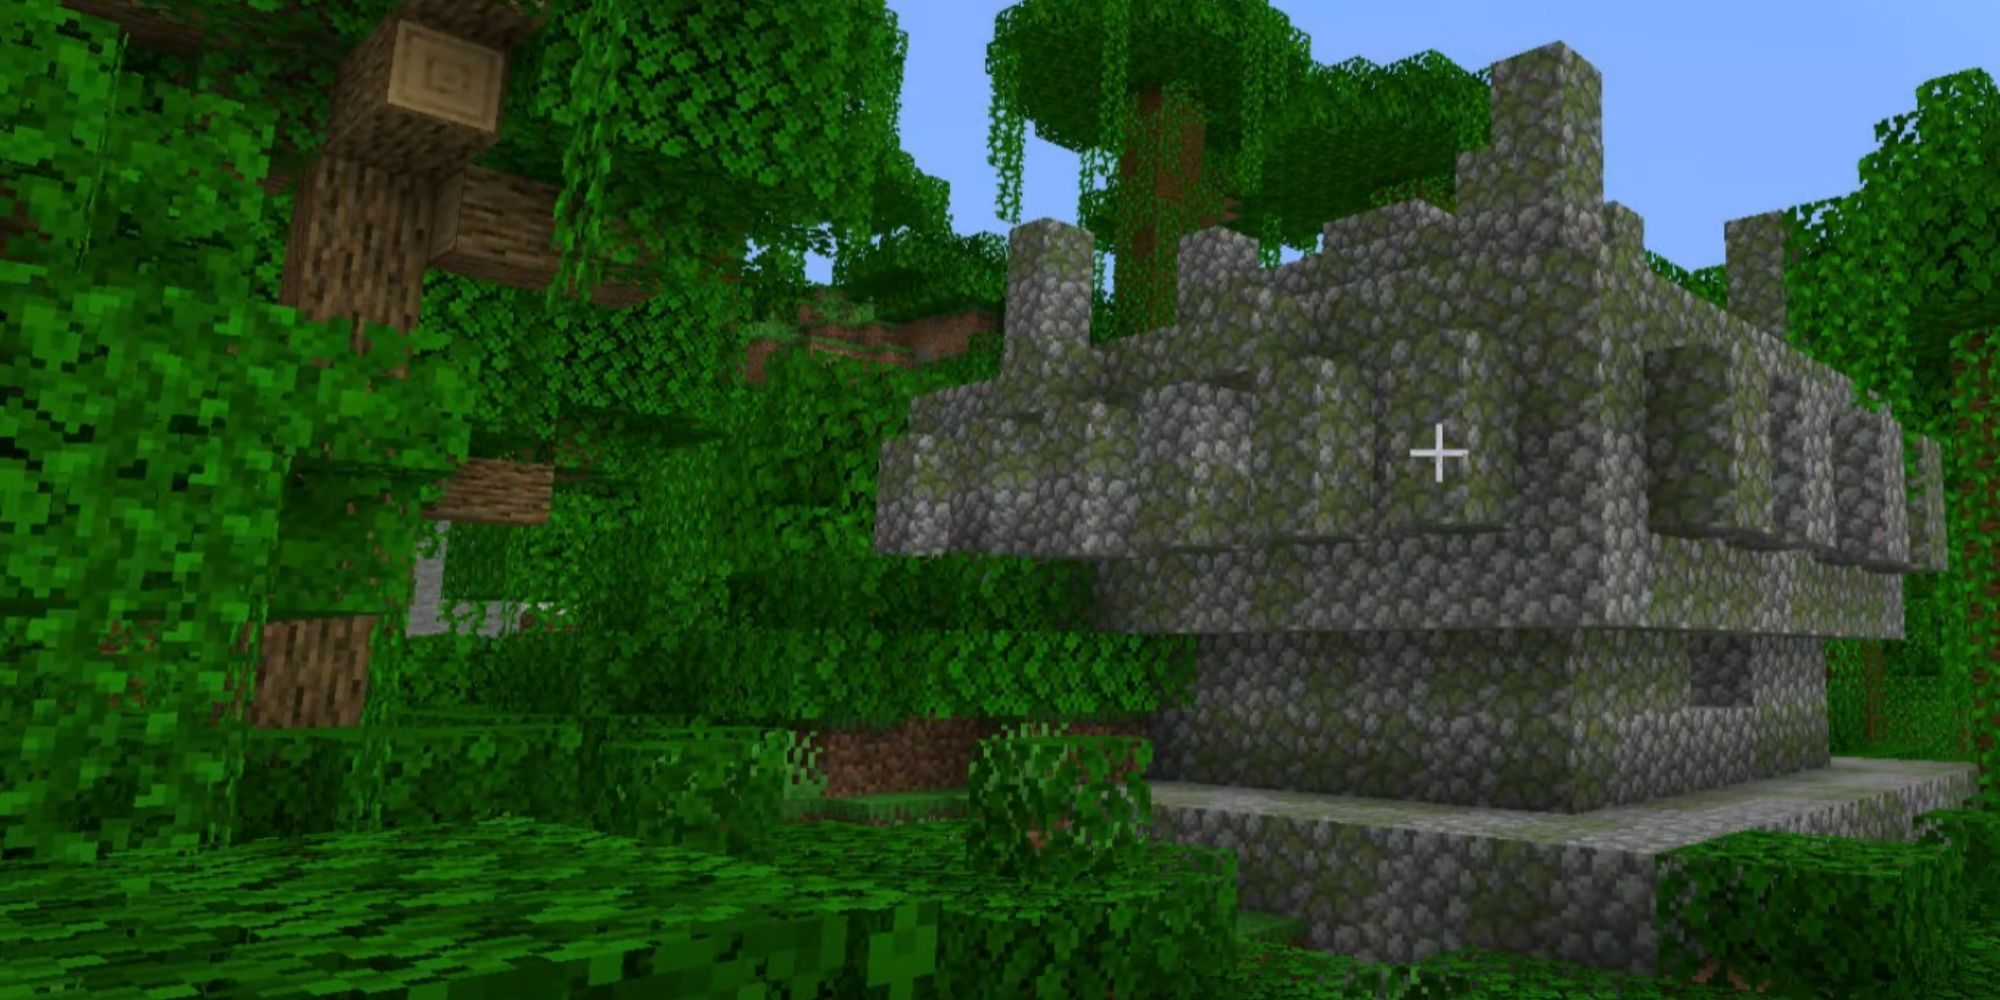 A screenshot showing a temple in a jungle in Minecraft